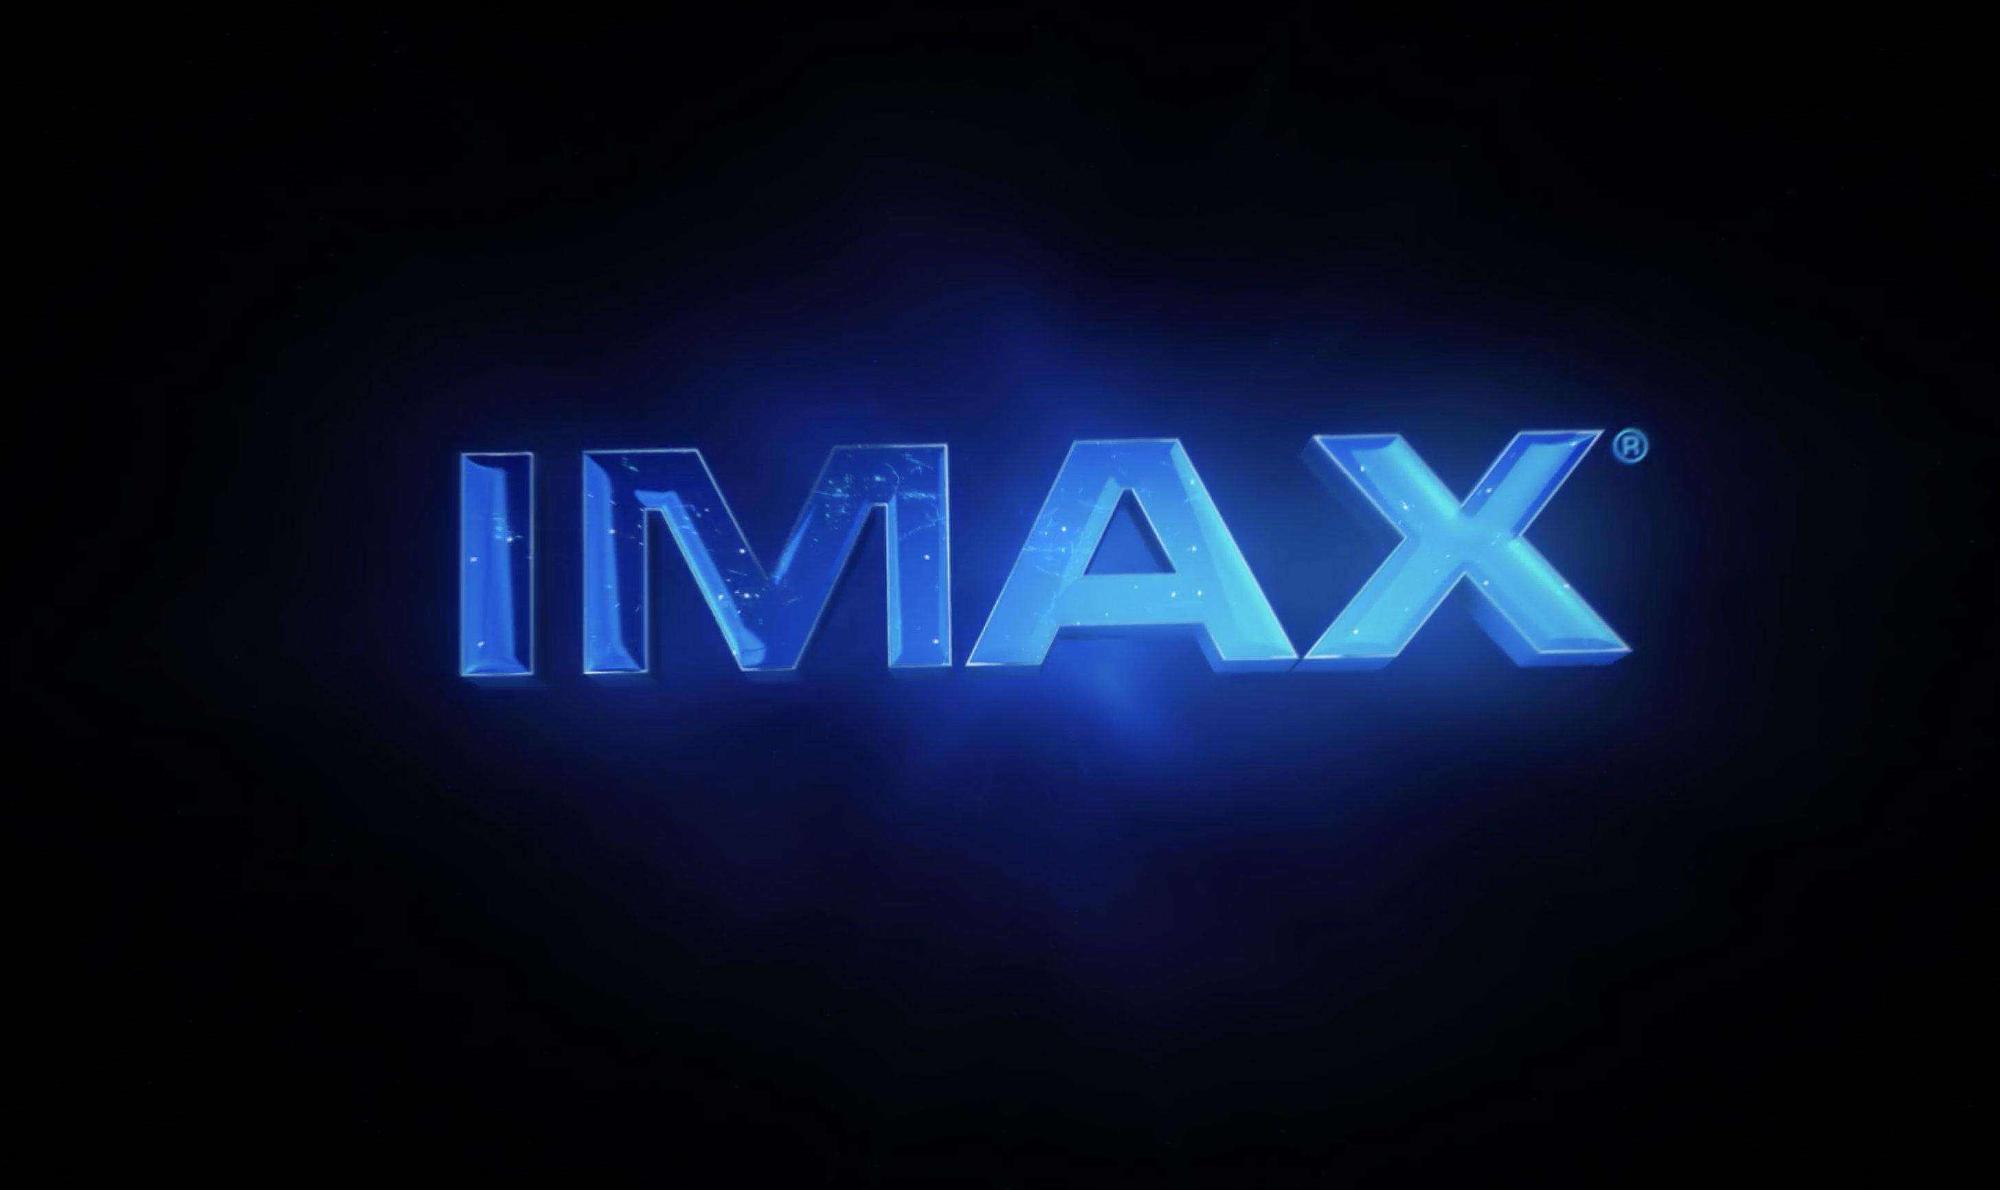 IMAX银幕什么材料,IMAX与巨幕的区别